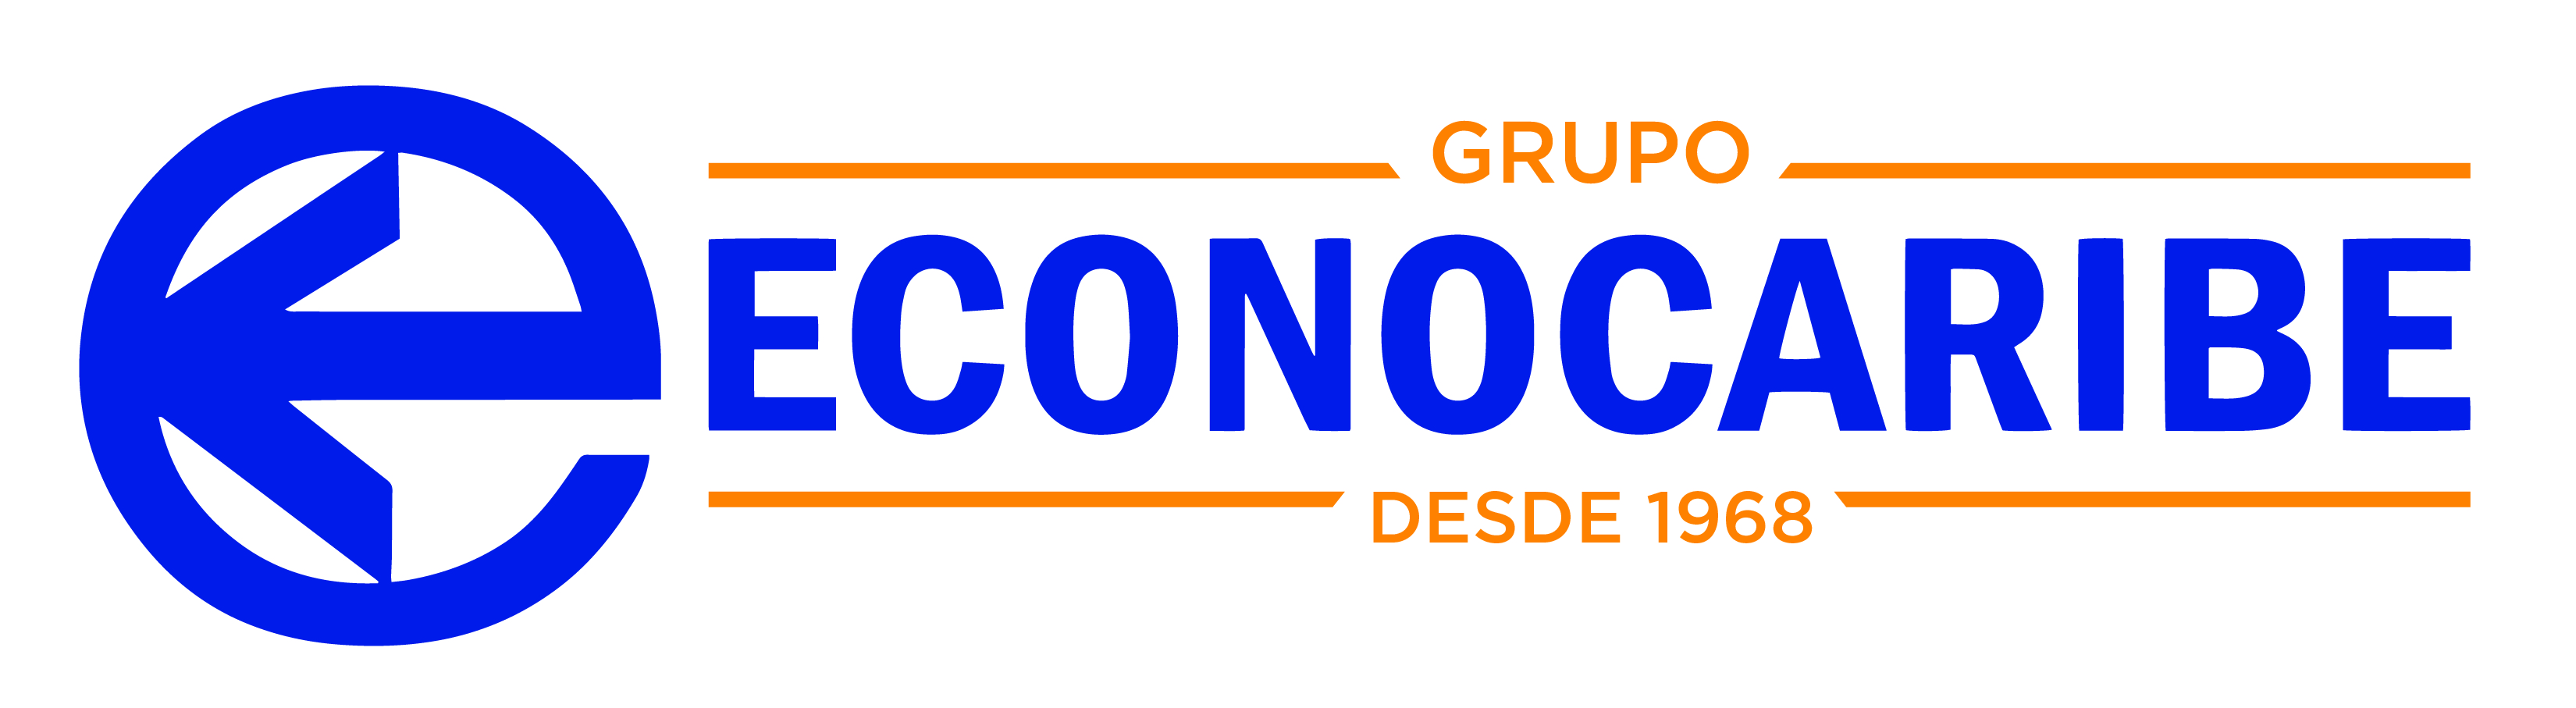 Econocaribe Consolidadora Tica S.A's logo